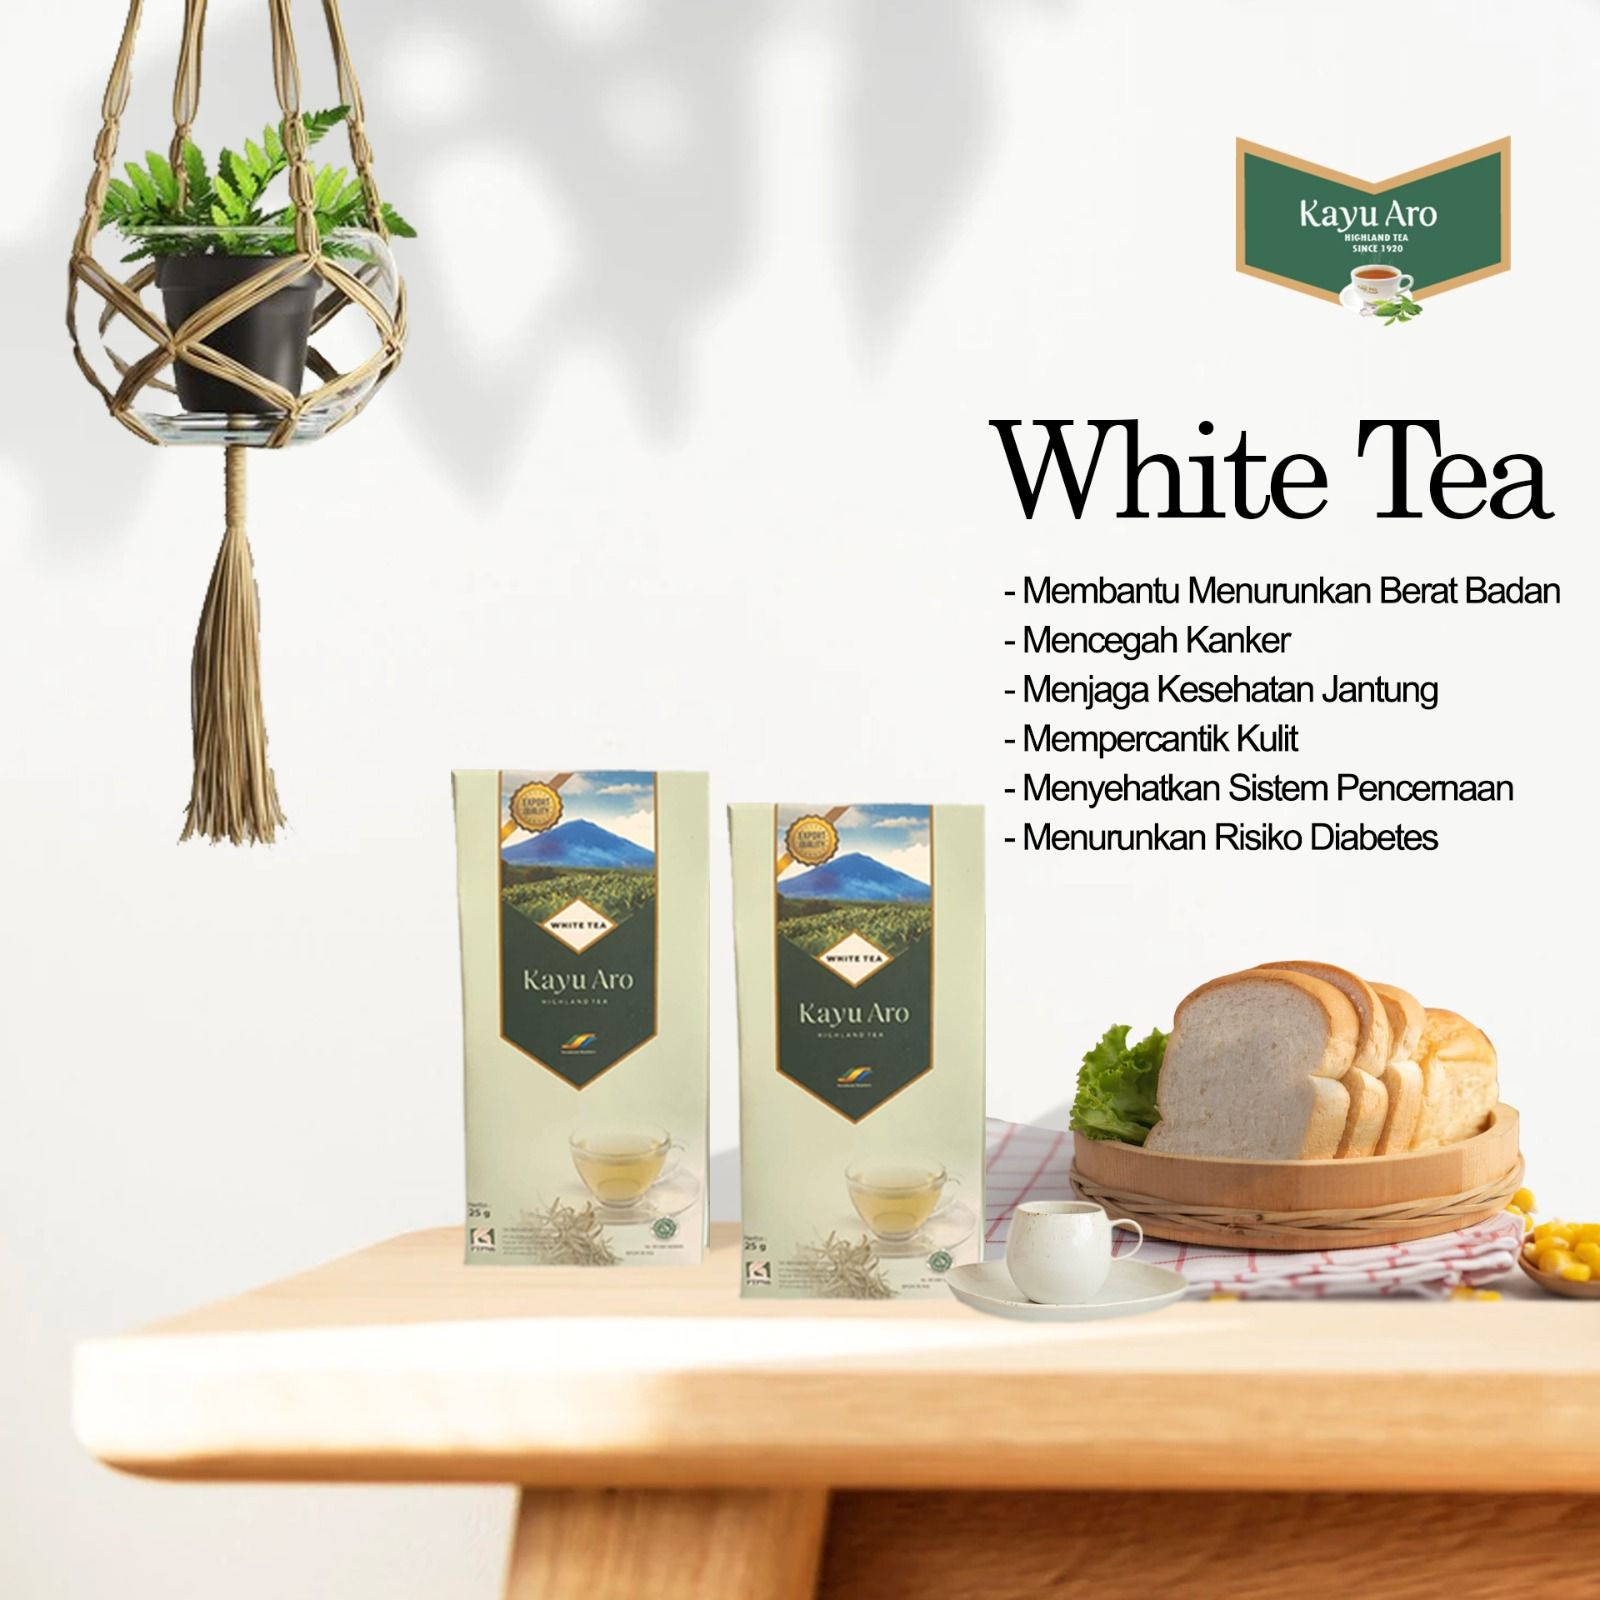 White Tea Produk PTPN VI Miliki Banyak Manfaat  